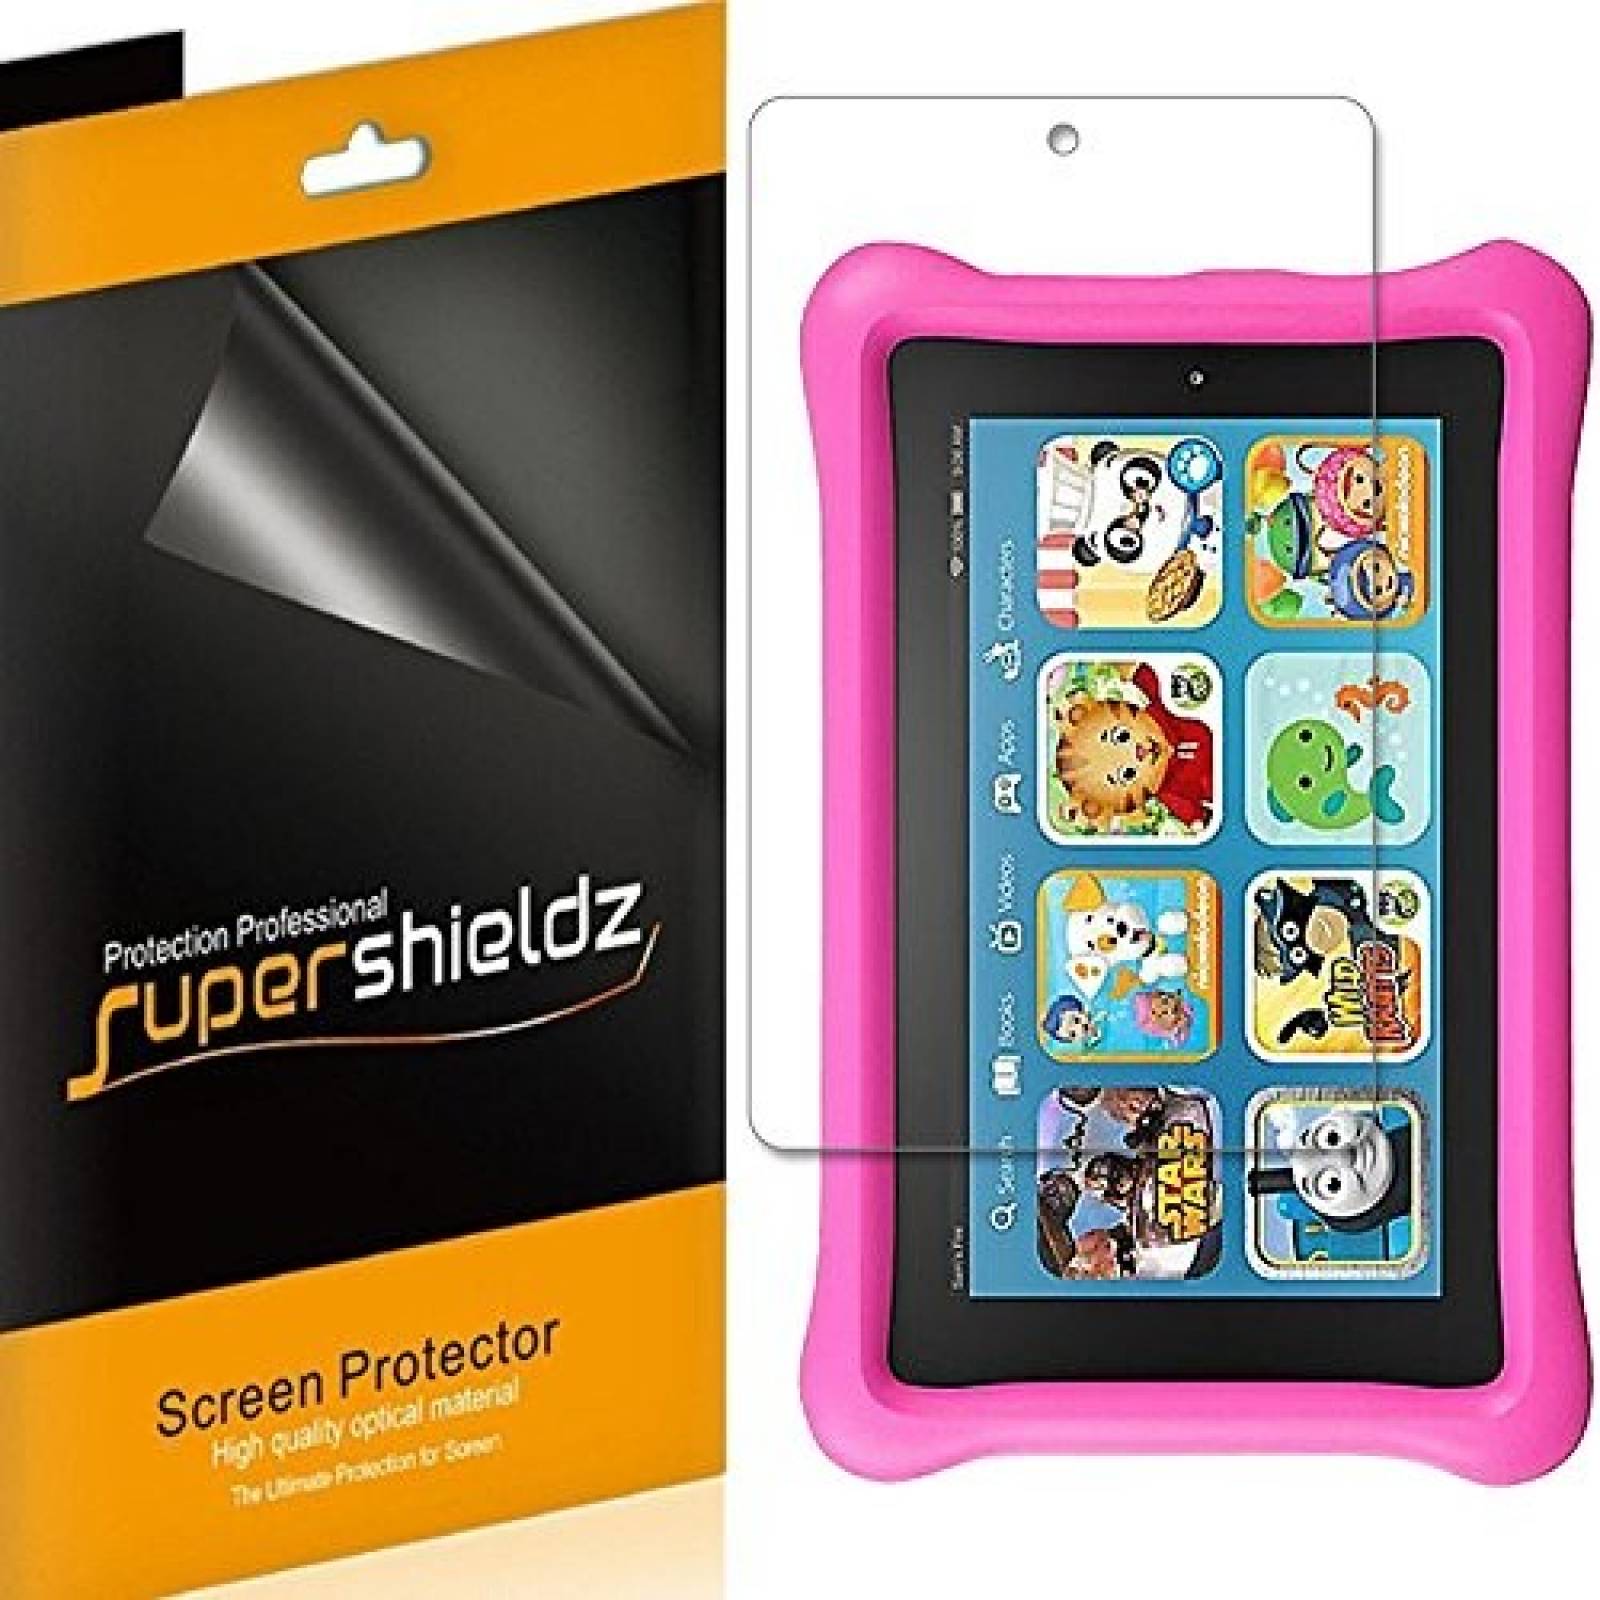 Protector de pantalla Supershieldz 7" tablet All-New Fire